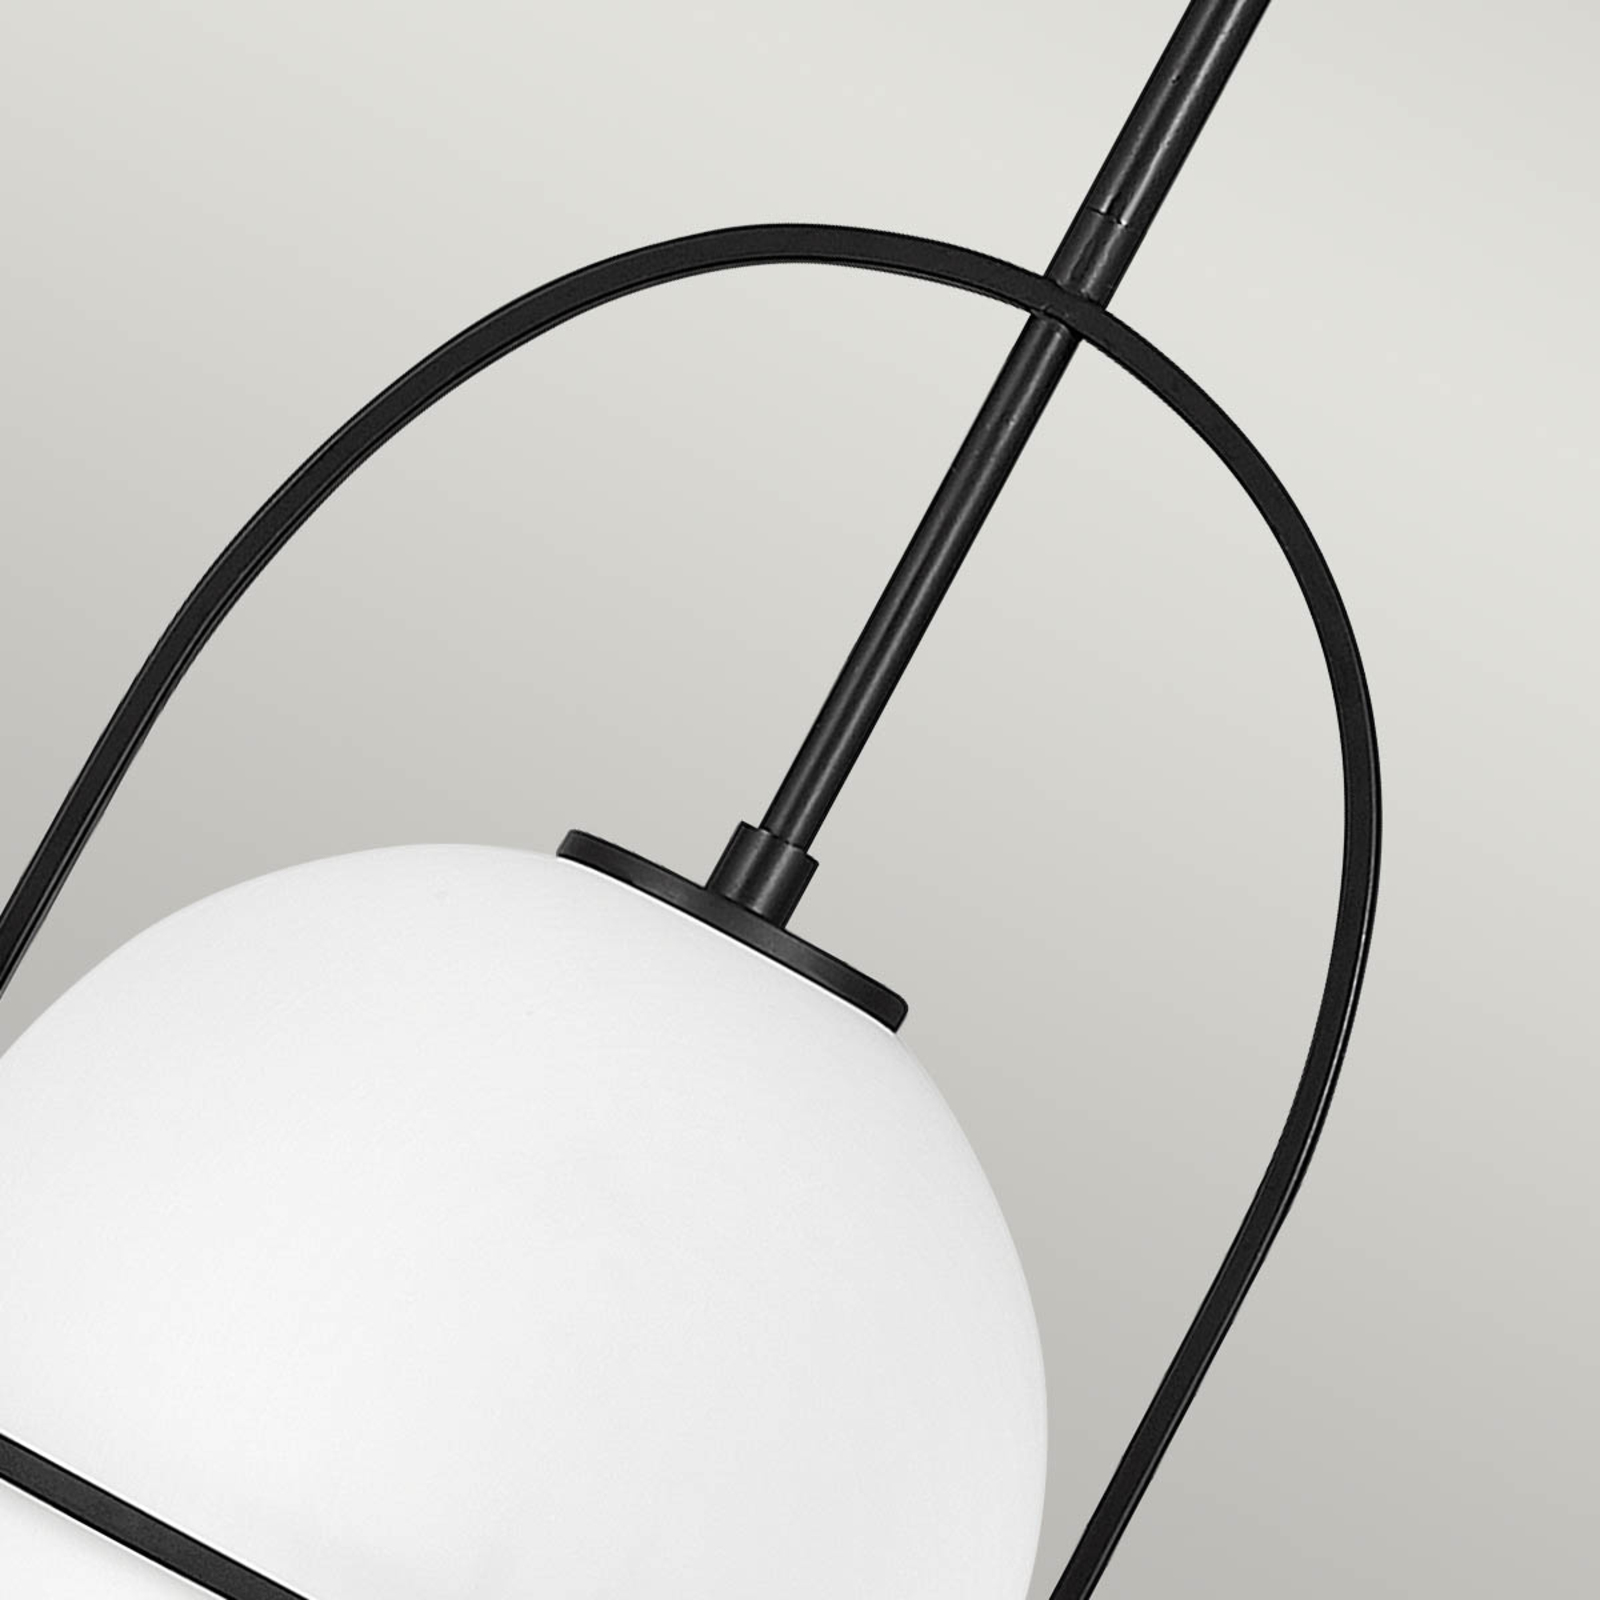 Hanglamp Thea, 1-lamp, zwart